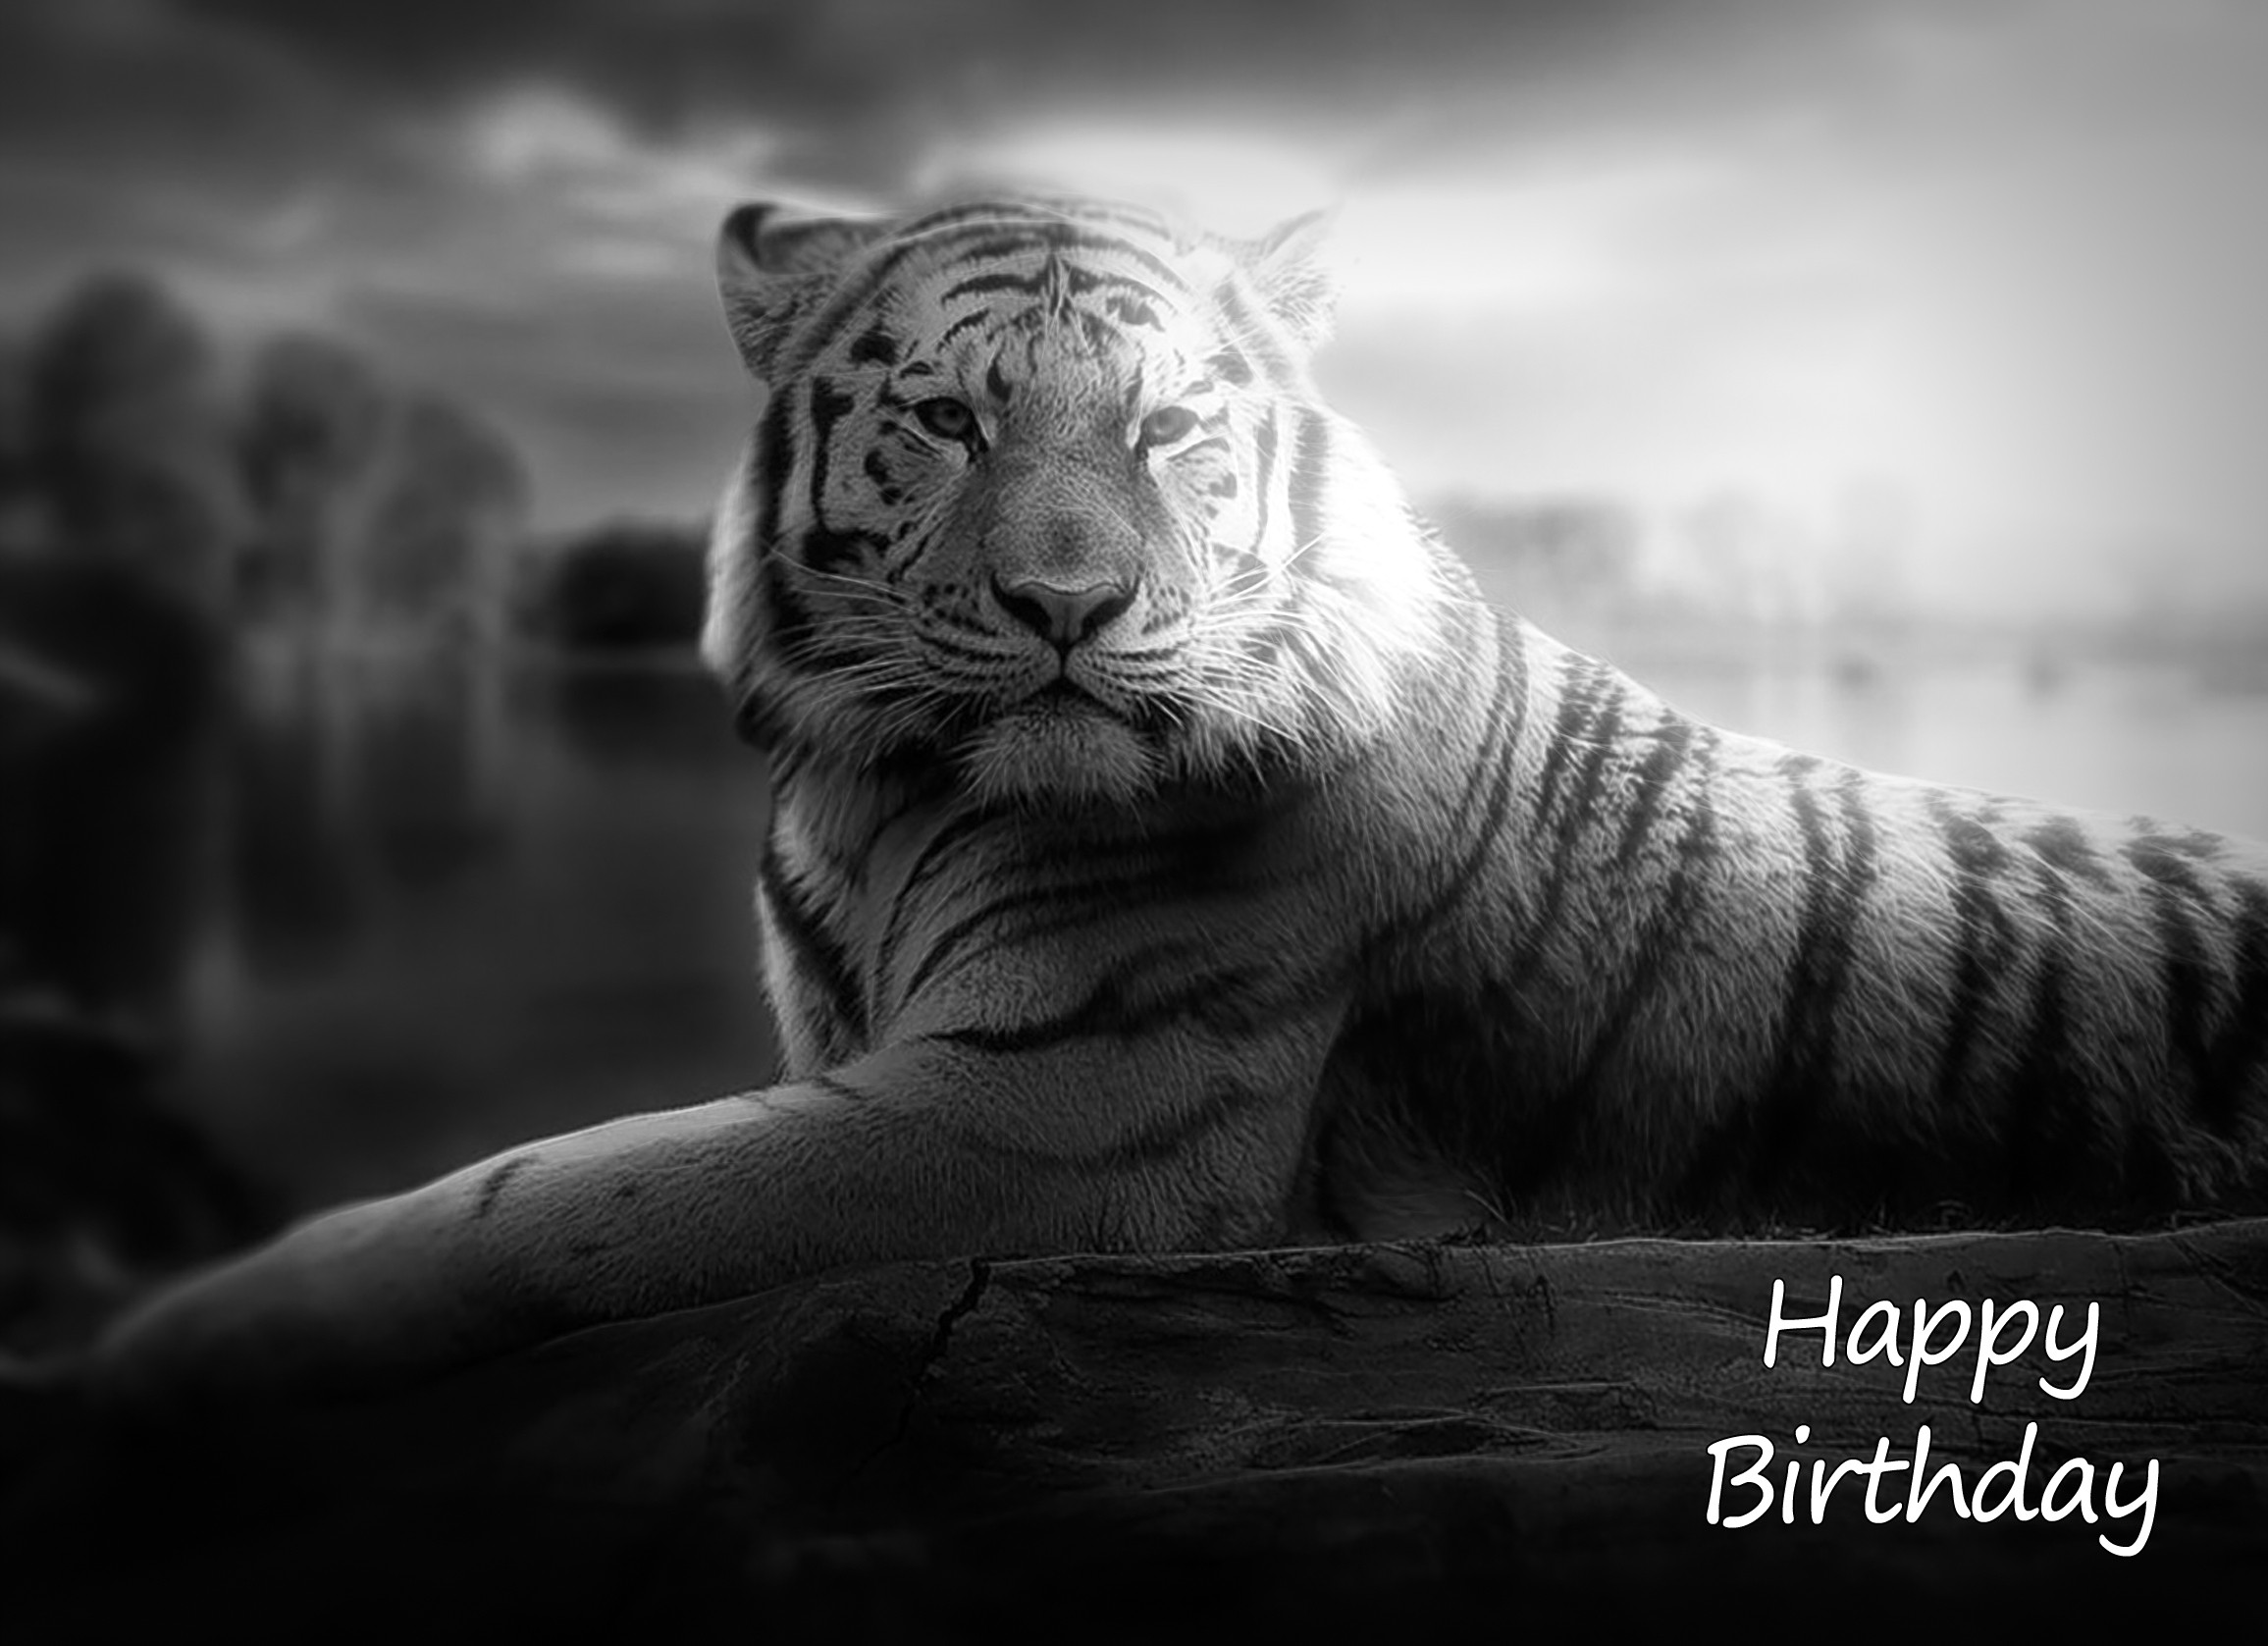 Tiger Black and White Art Birthday Card